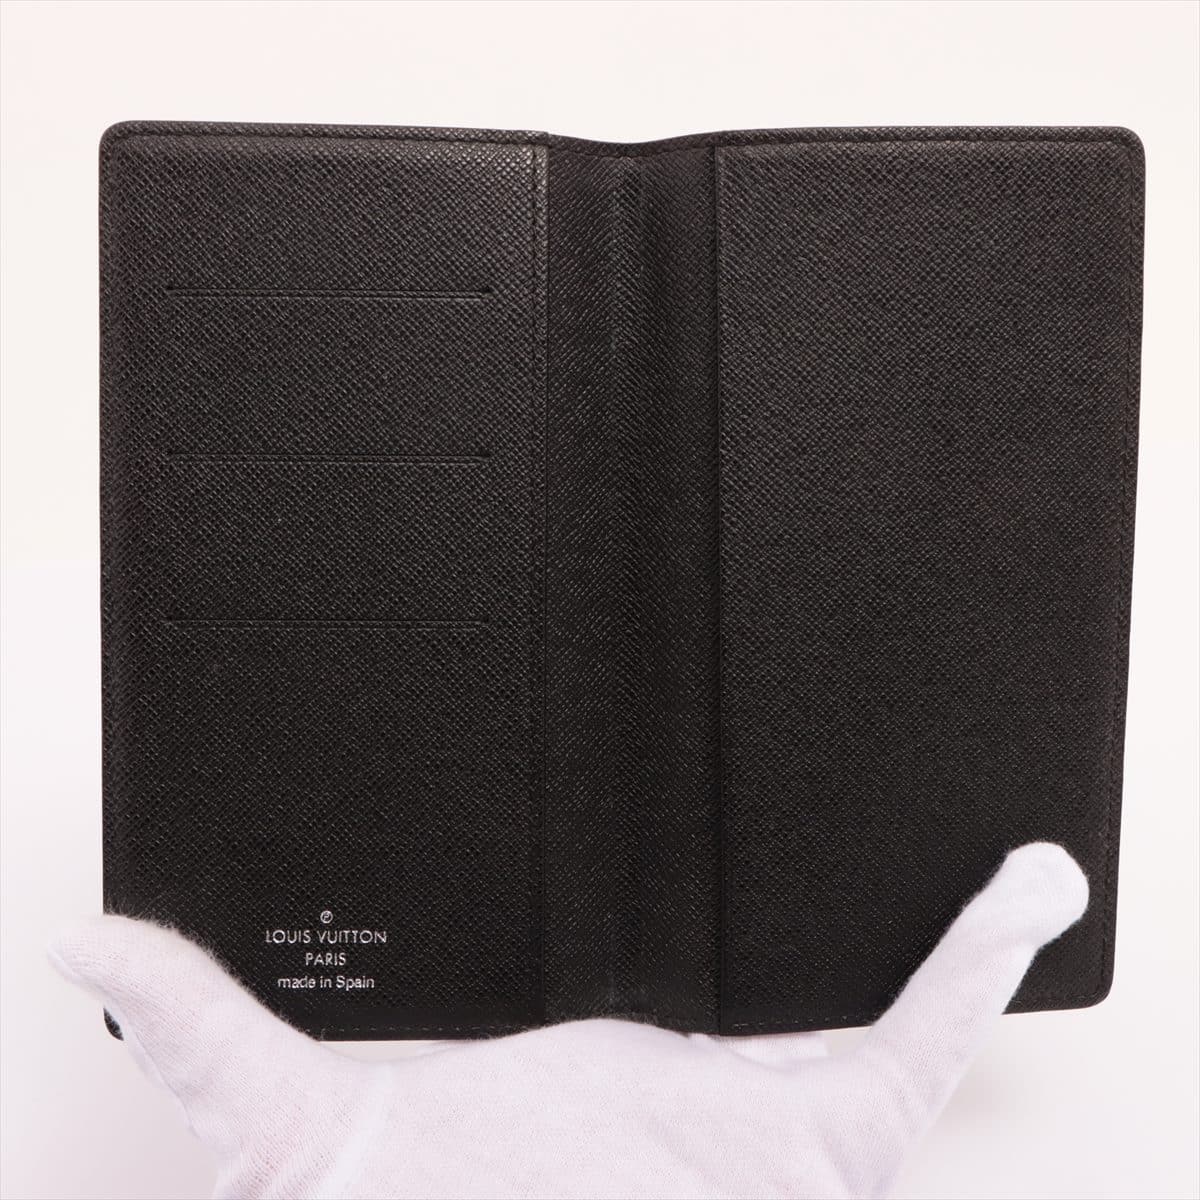 Louis Vuitton Damier graphite Agenda Posh R20975 Black Notebook cover